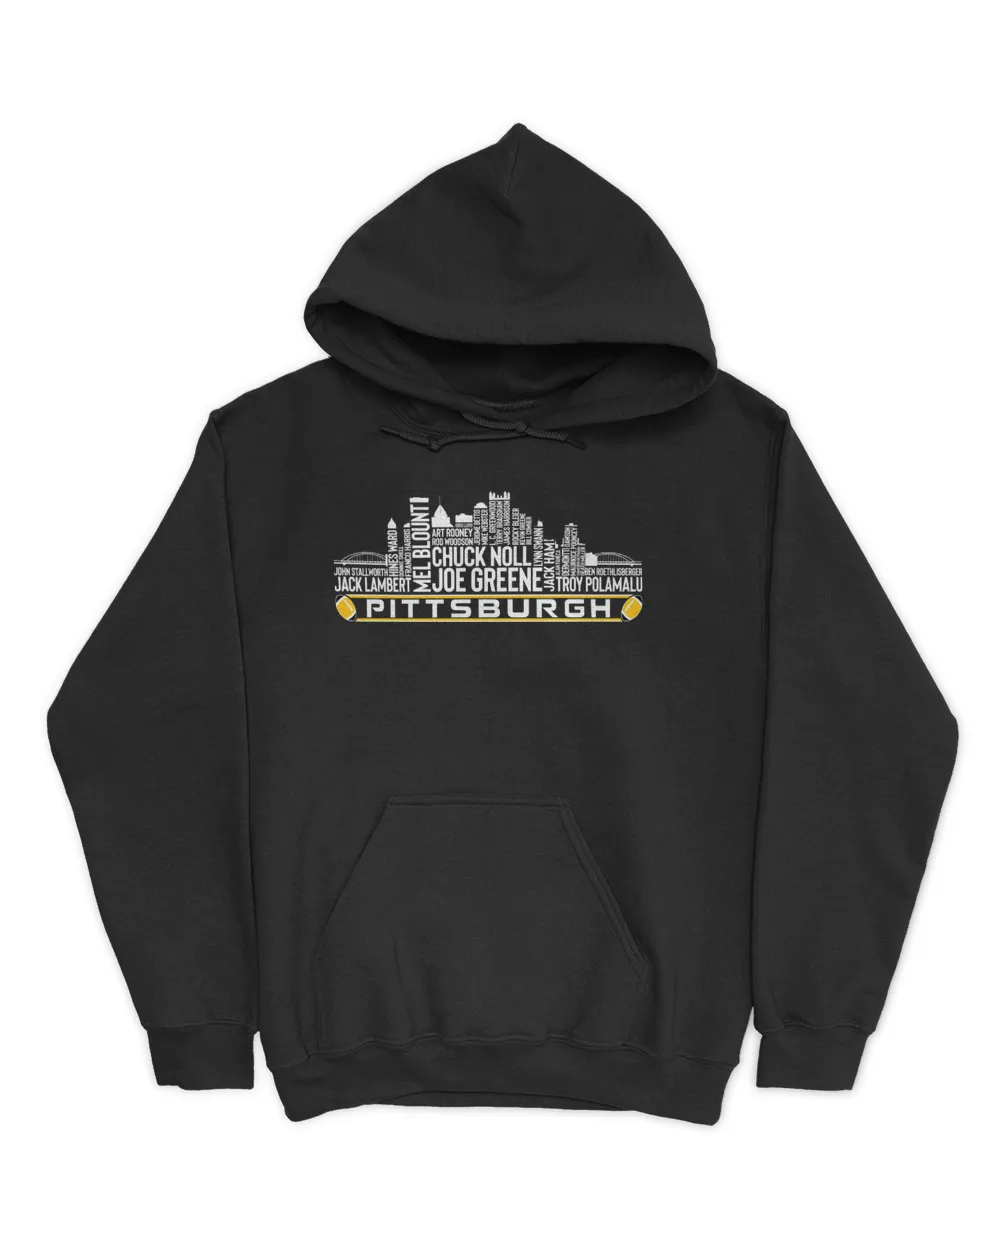 Pittsburgh Steelers Football Legends Pittsburgh City Skyline